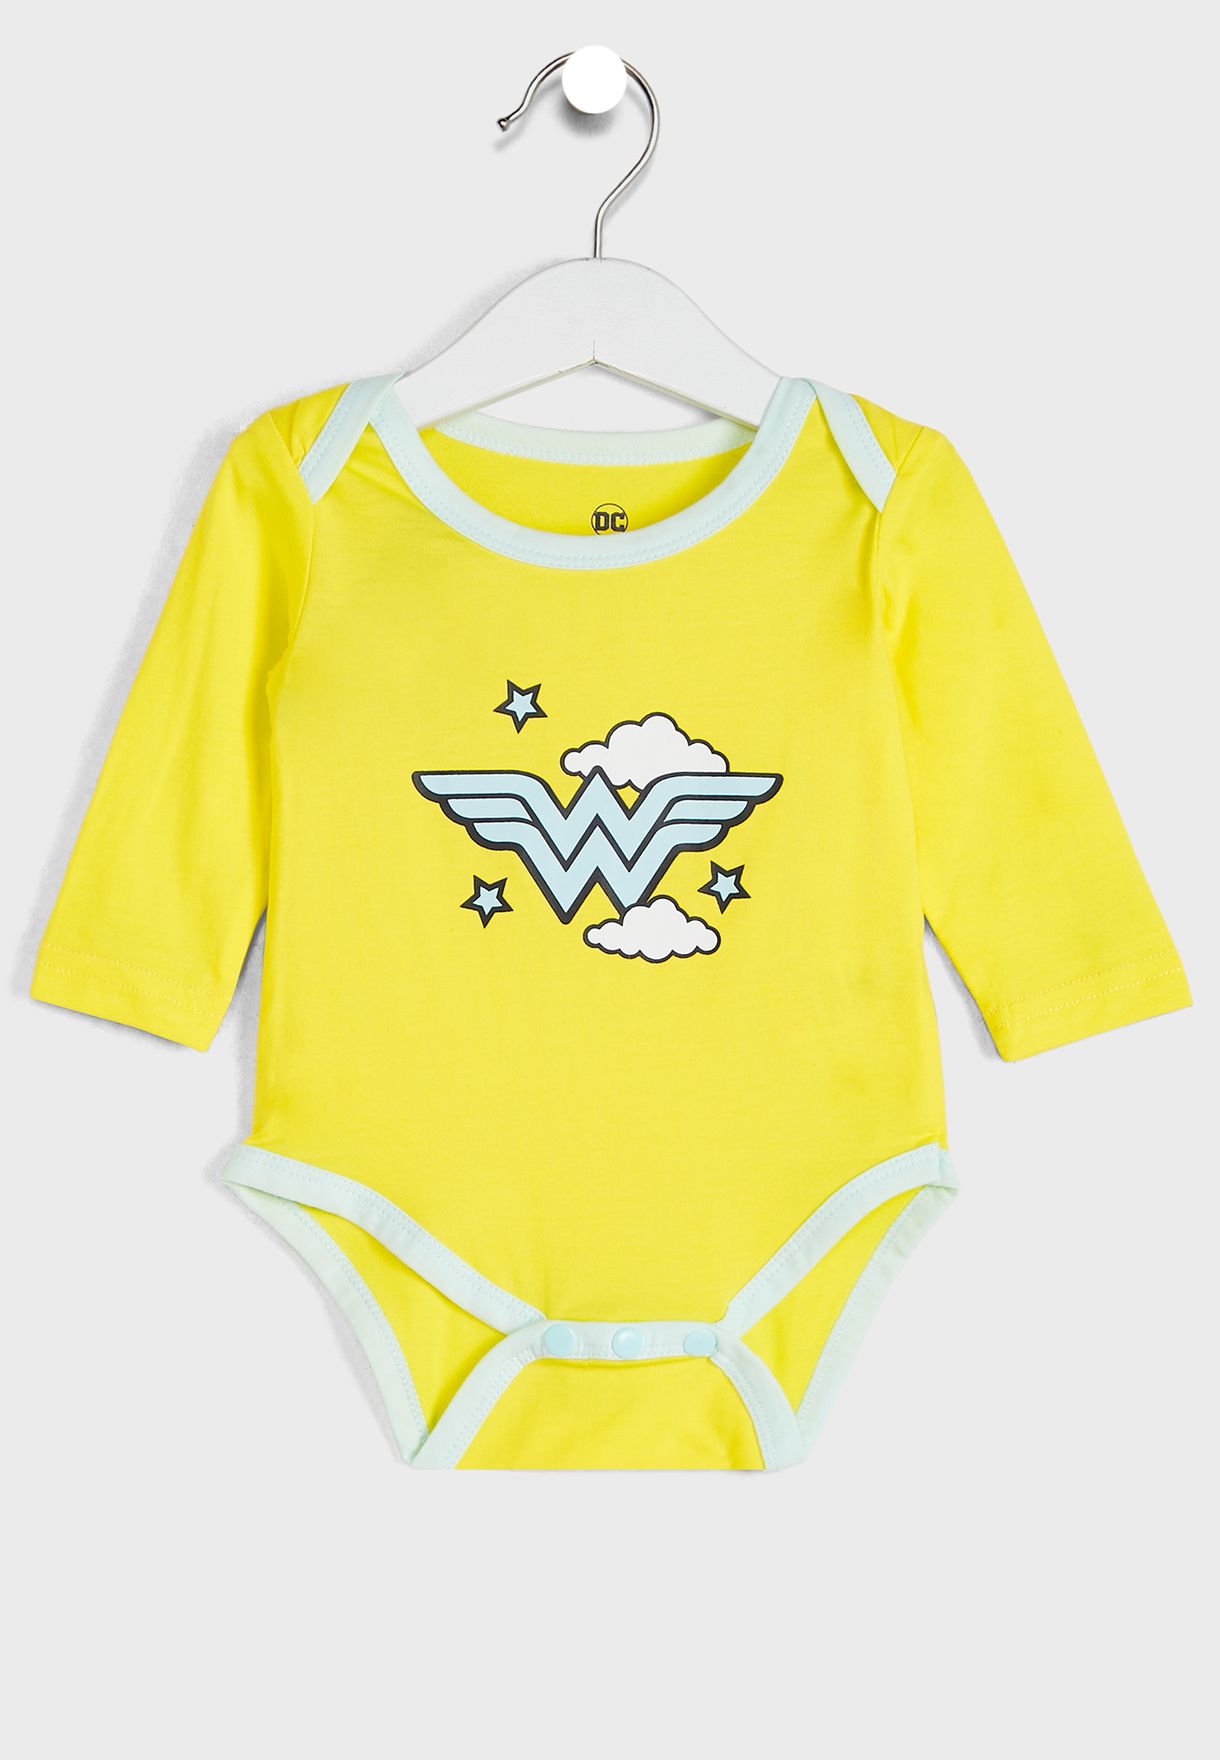 Infant Wonder Woman Bodysuit